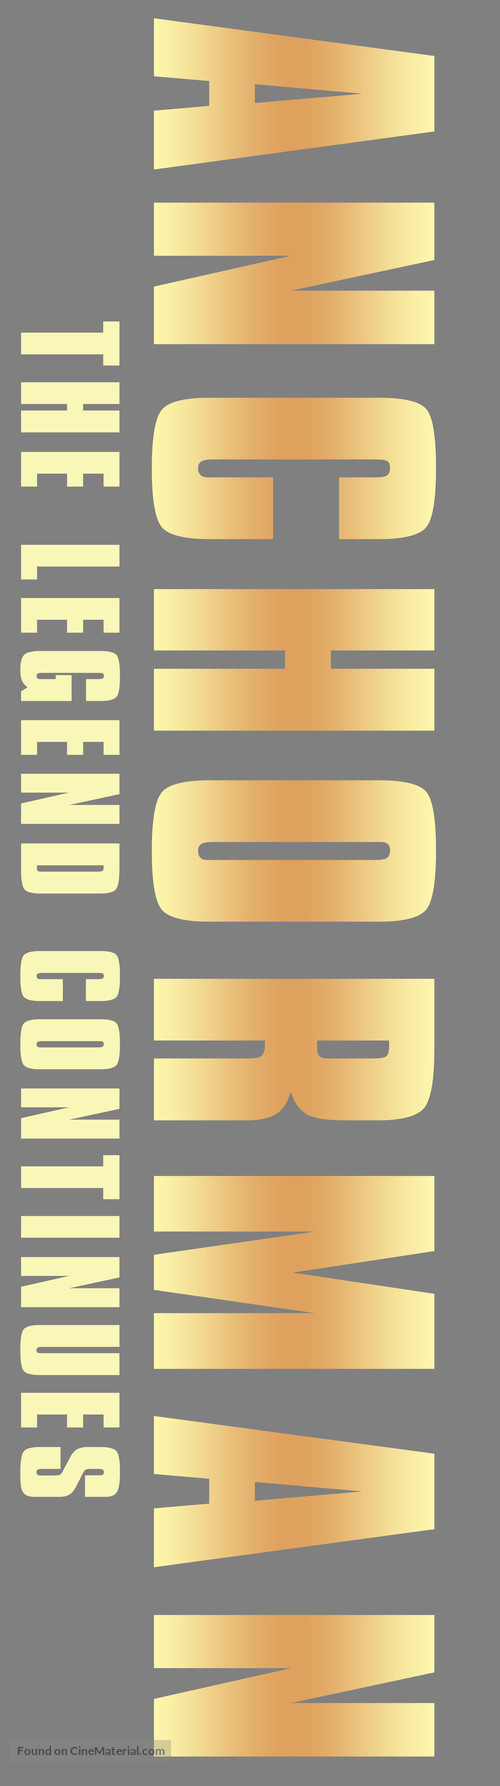 Anchorman 2: The Legend Continues - Logo